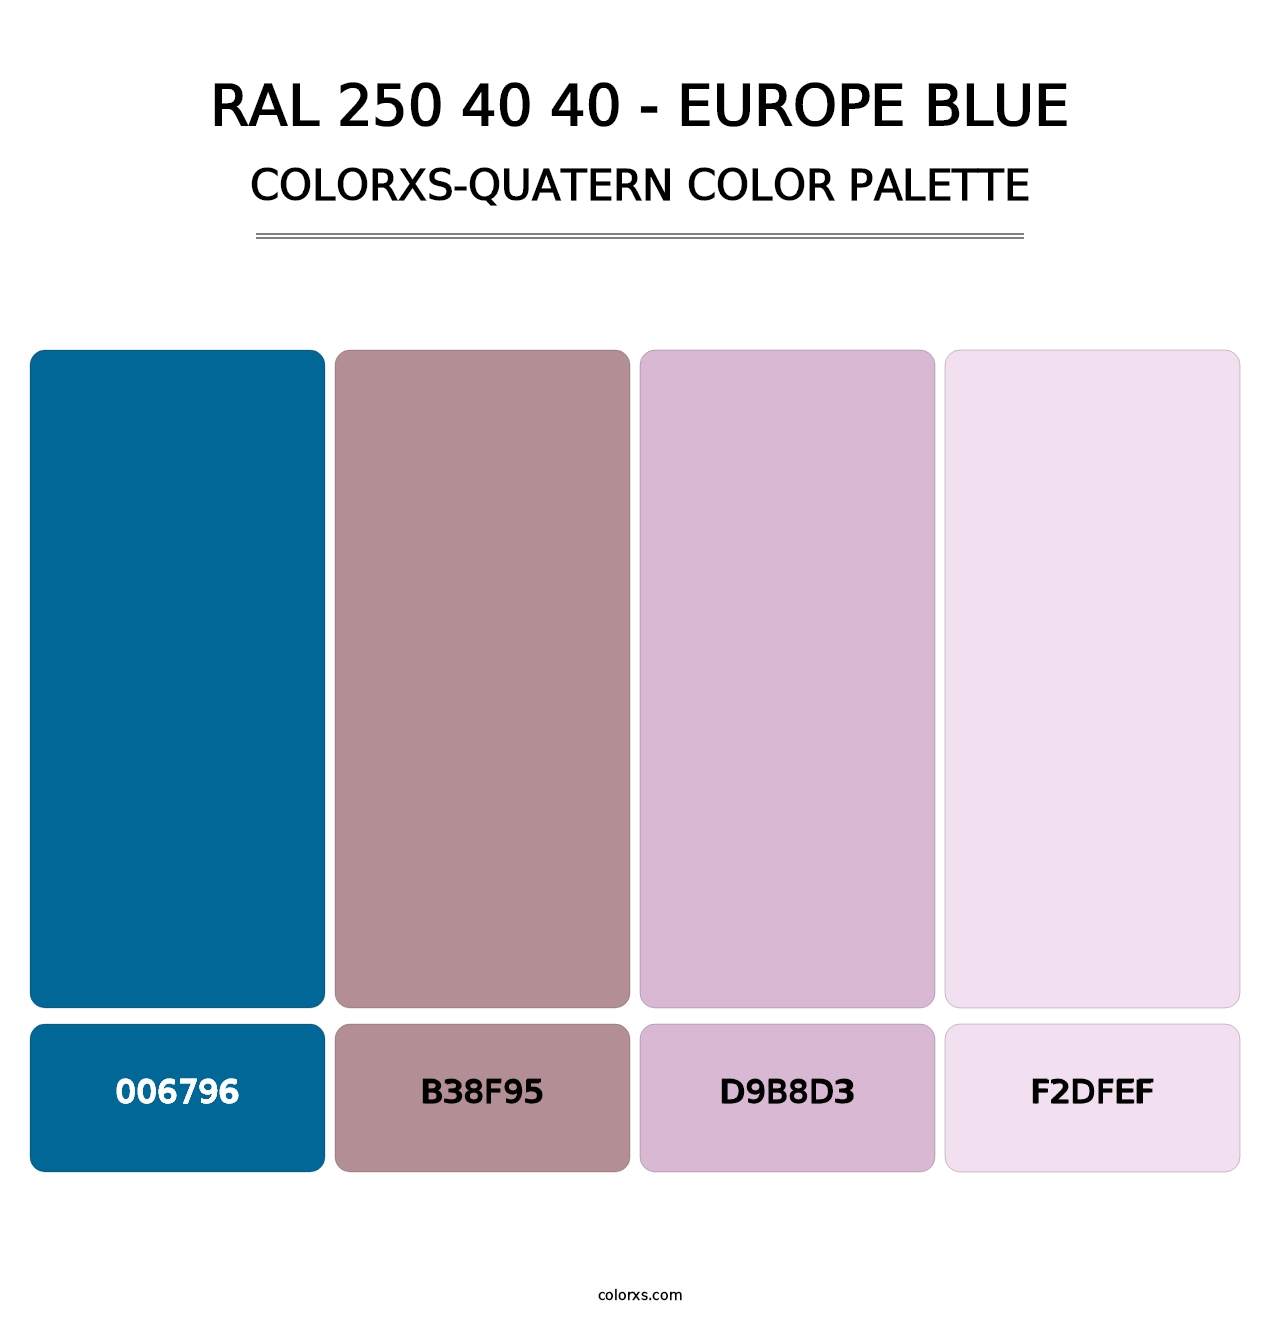 RAL 250 40 40 - Europe Blue - Colorxs Quatern Palette